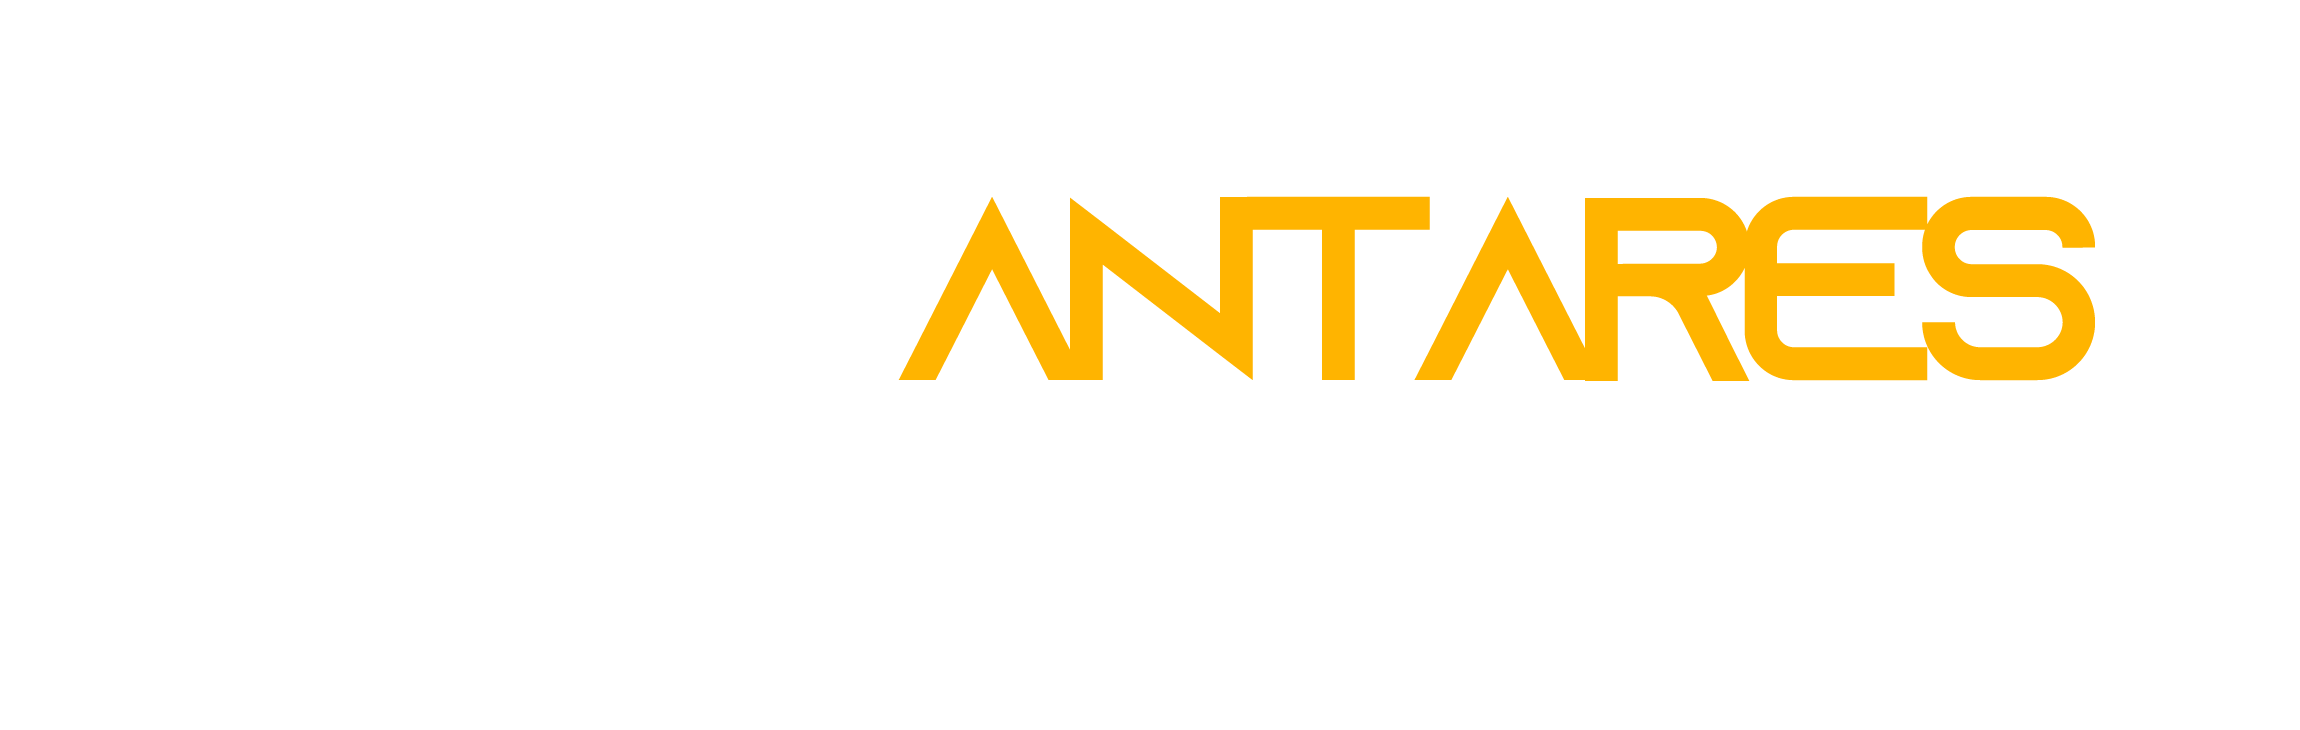 Antares Image